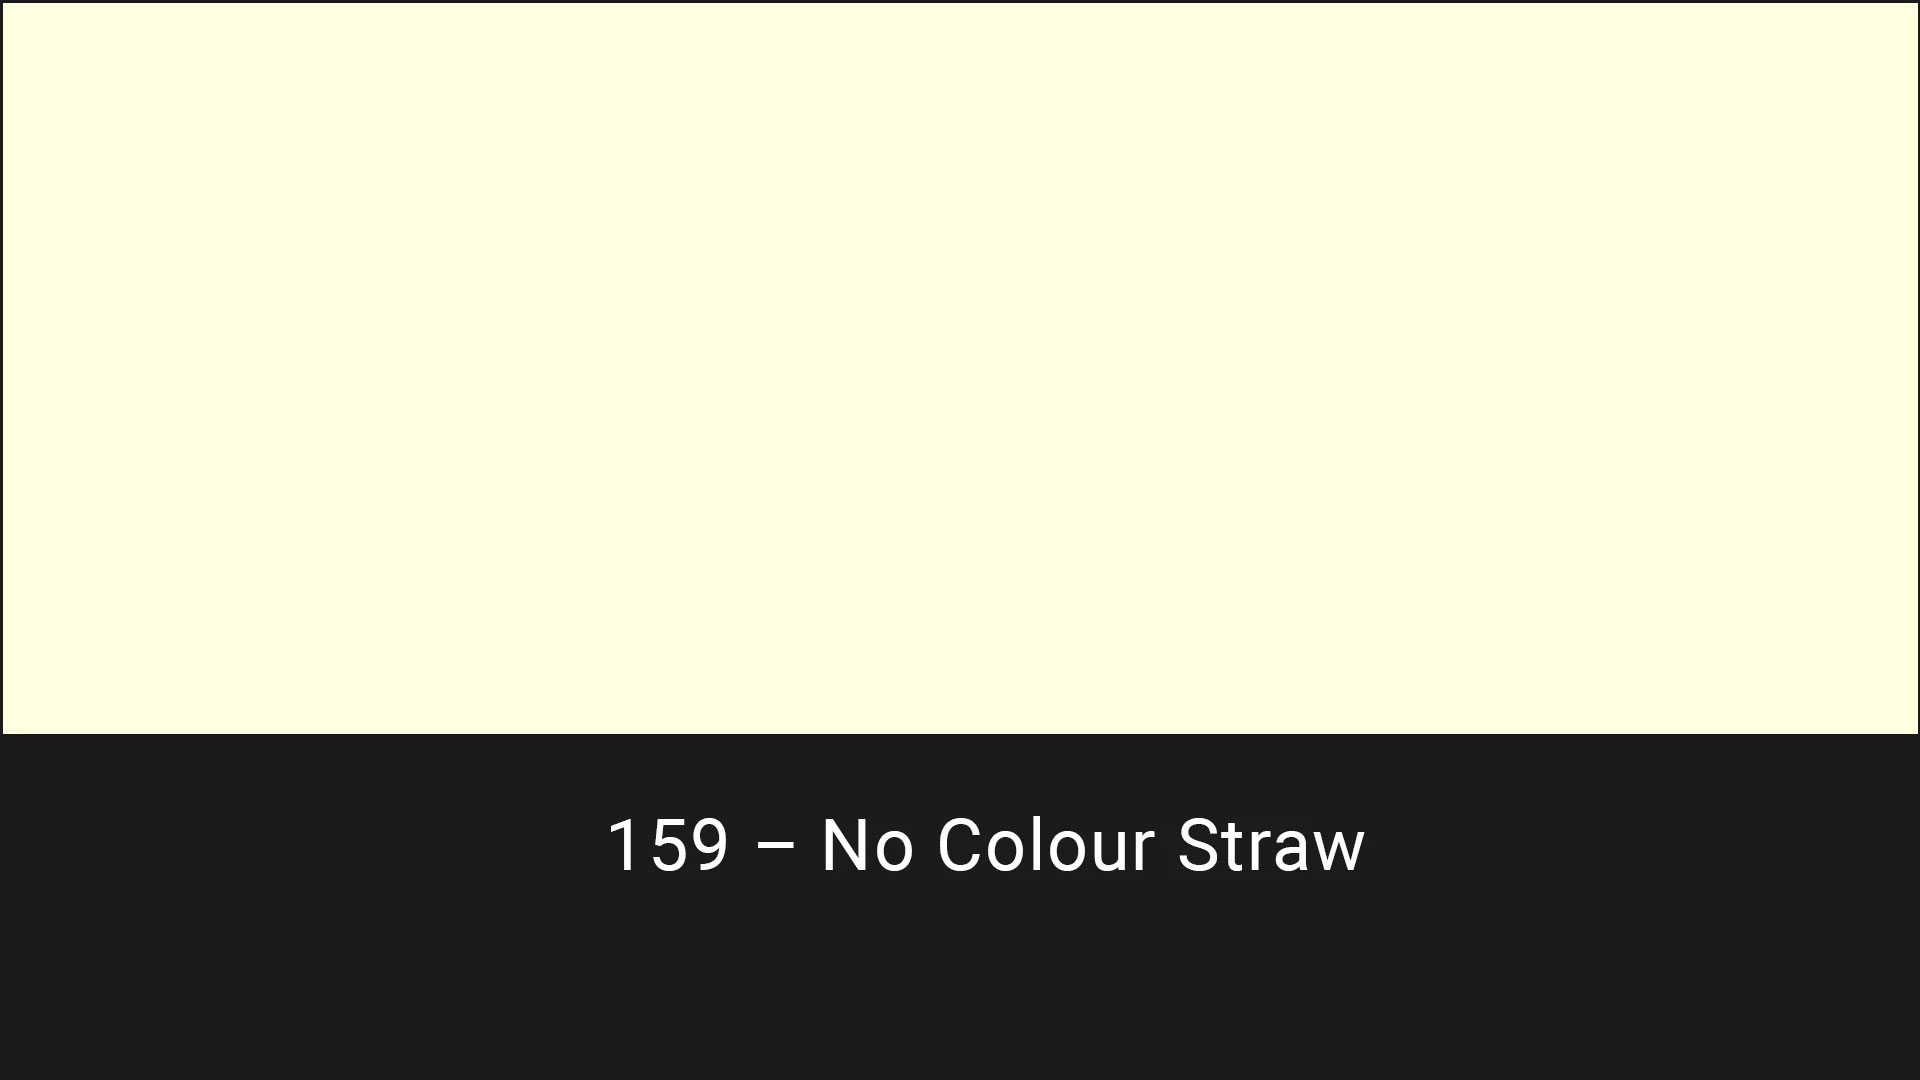 Cotech filters 159 No Colour Straw